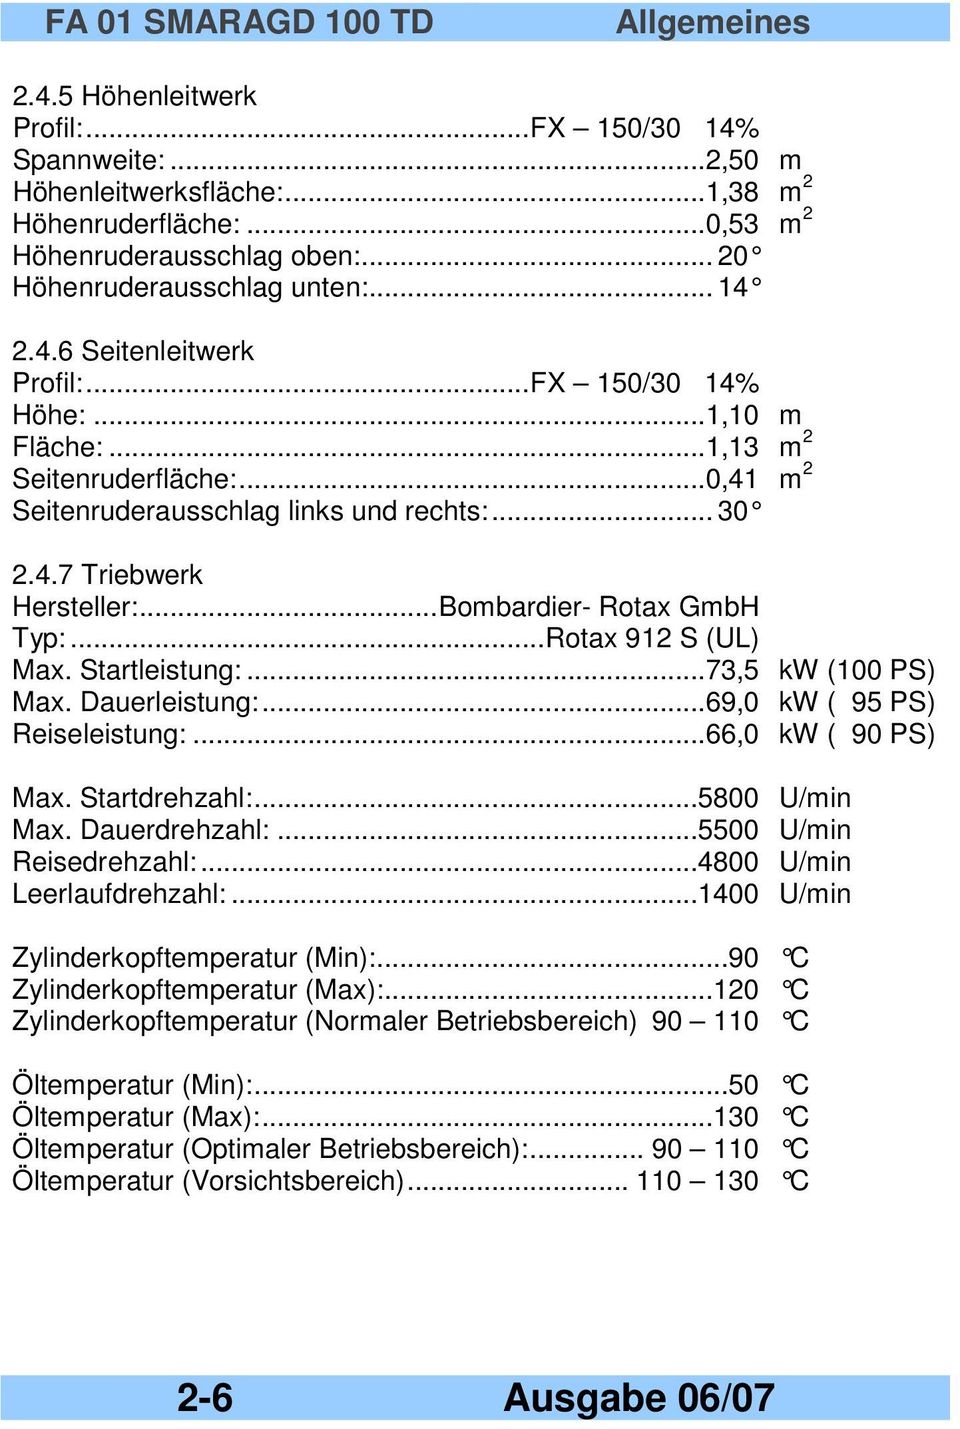 ..Bombardier- Rotax GmbH Typ:...Rotax 912 S (UL) Max. Startleistung:...73,5 kw (100 PS) Max. Dauerleistung:...69,0 kw ( 95 PS) Reiseleistung:...66,0 kw ( 90 PS) Max. Startdrehzahl:...5800 U/min Max.